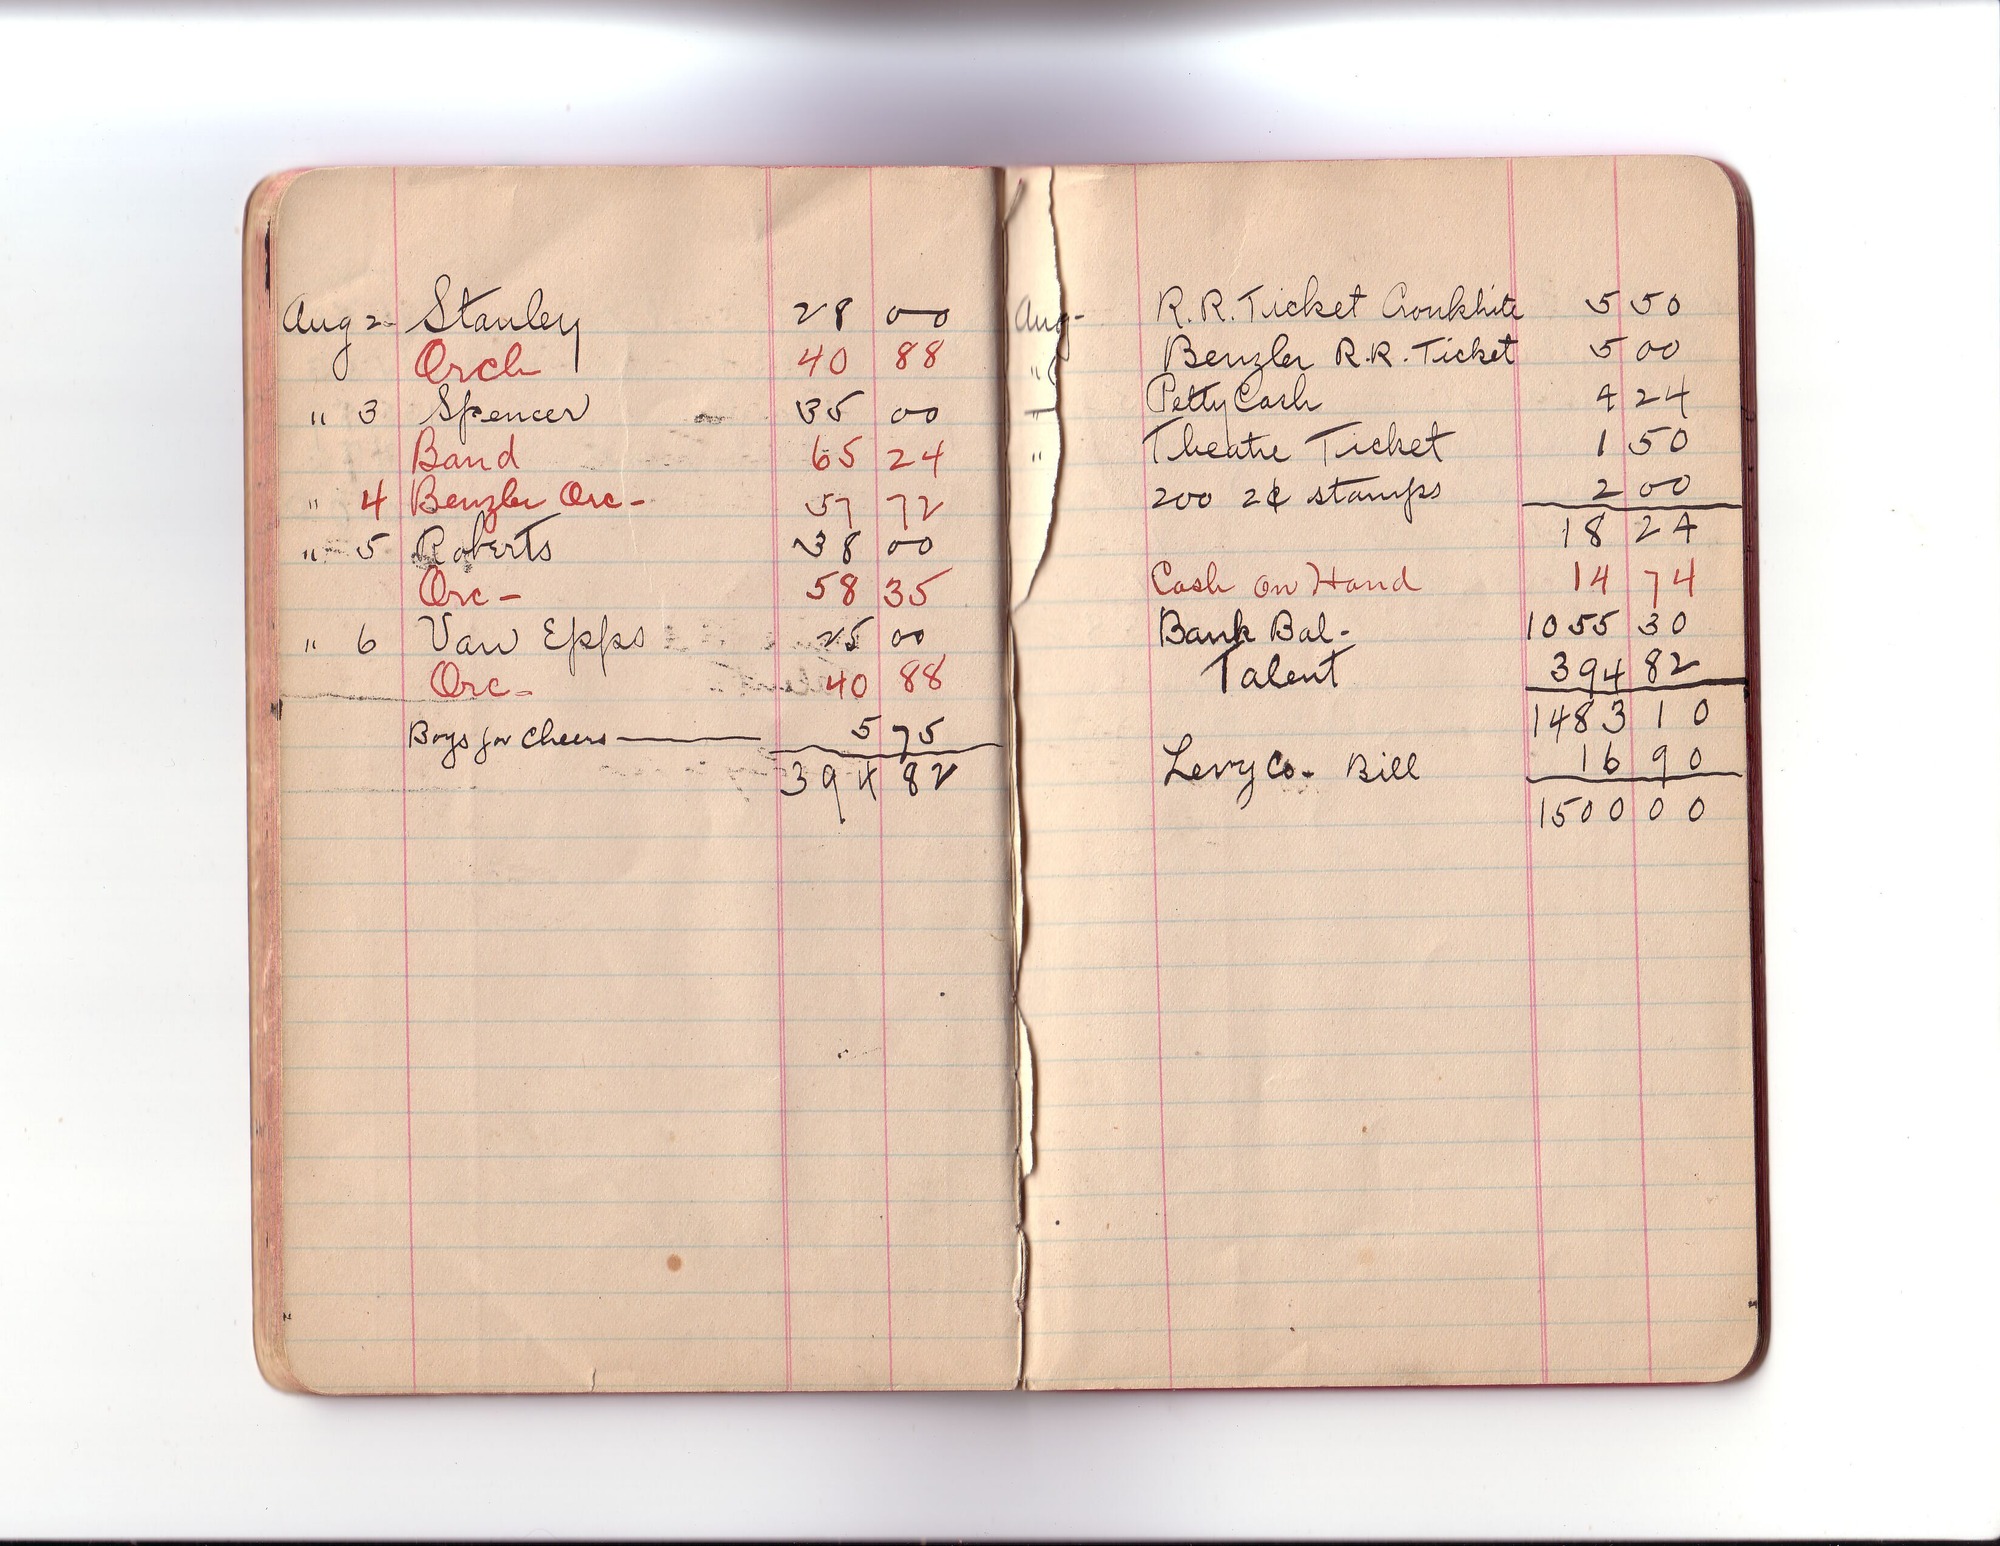 Thomas Edison's New York City Recording Studio Cash Book 01 (of 21), Image 21 (of 41).